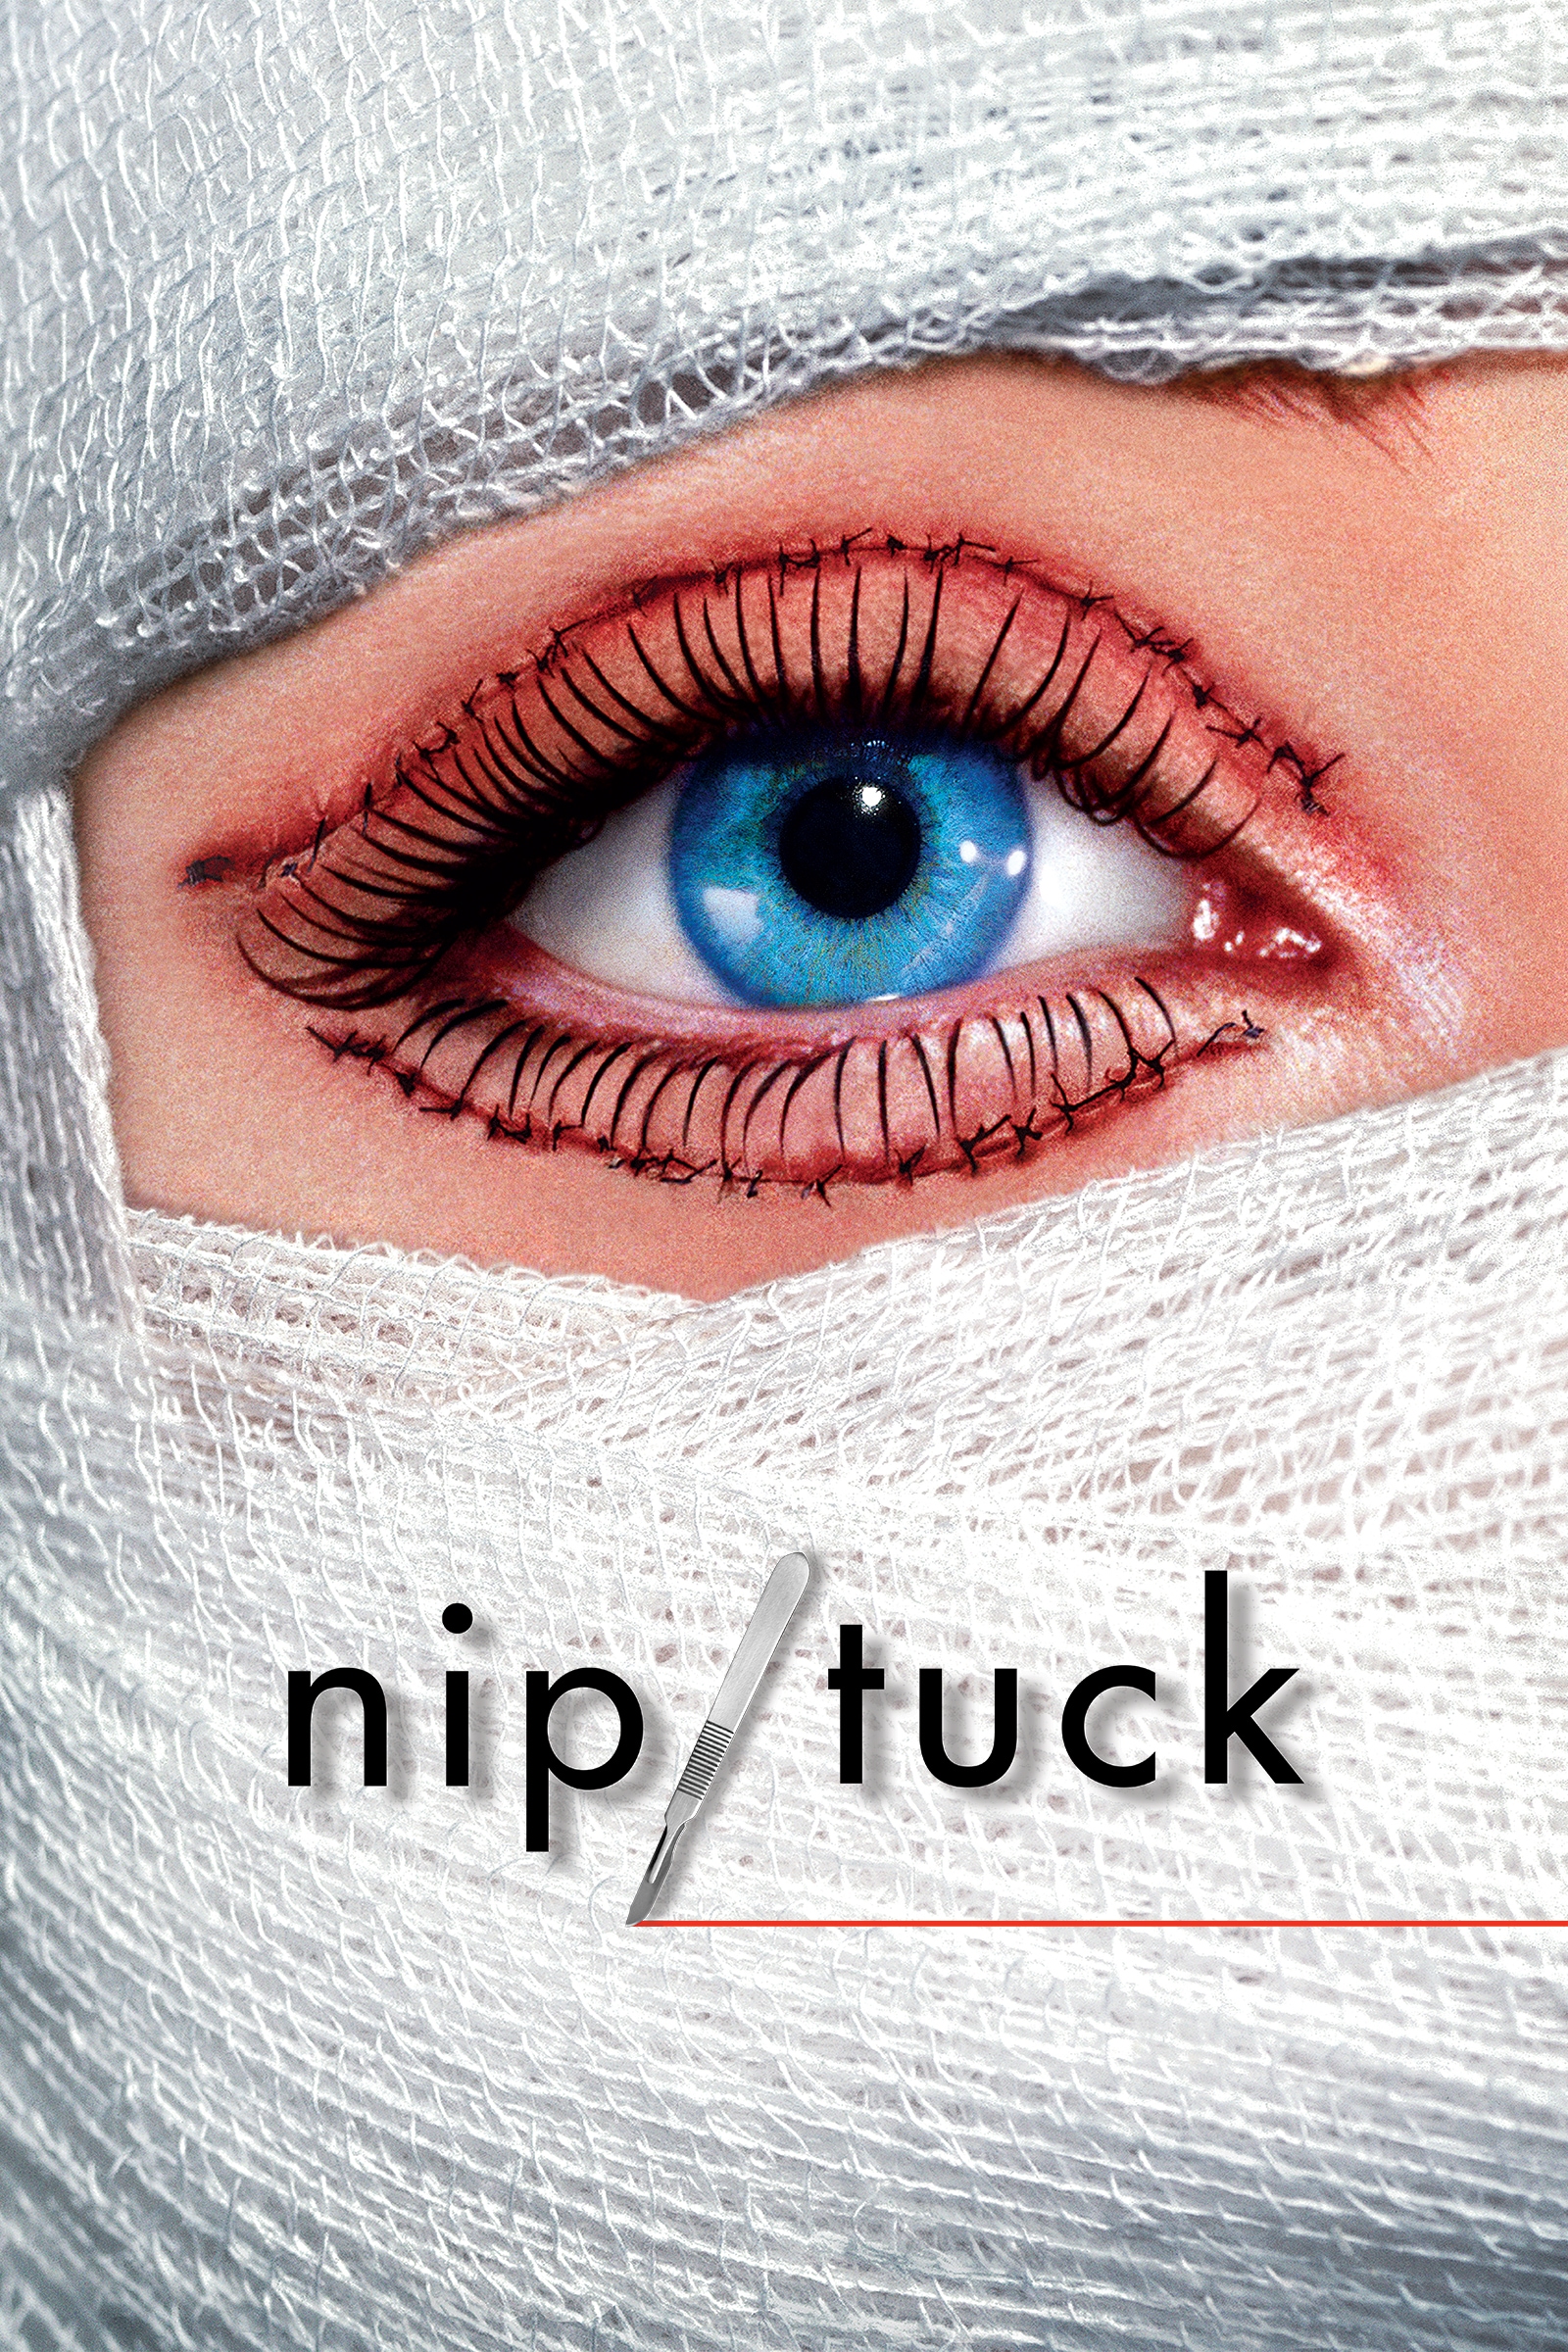 watch full episodes of nip tuck season 1